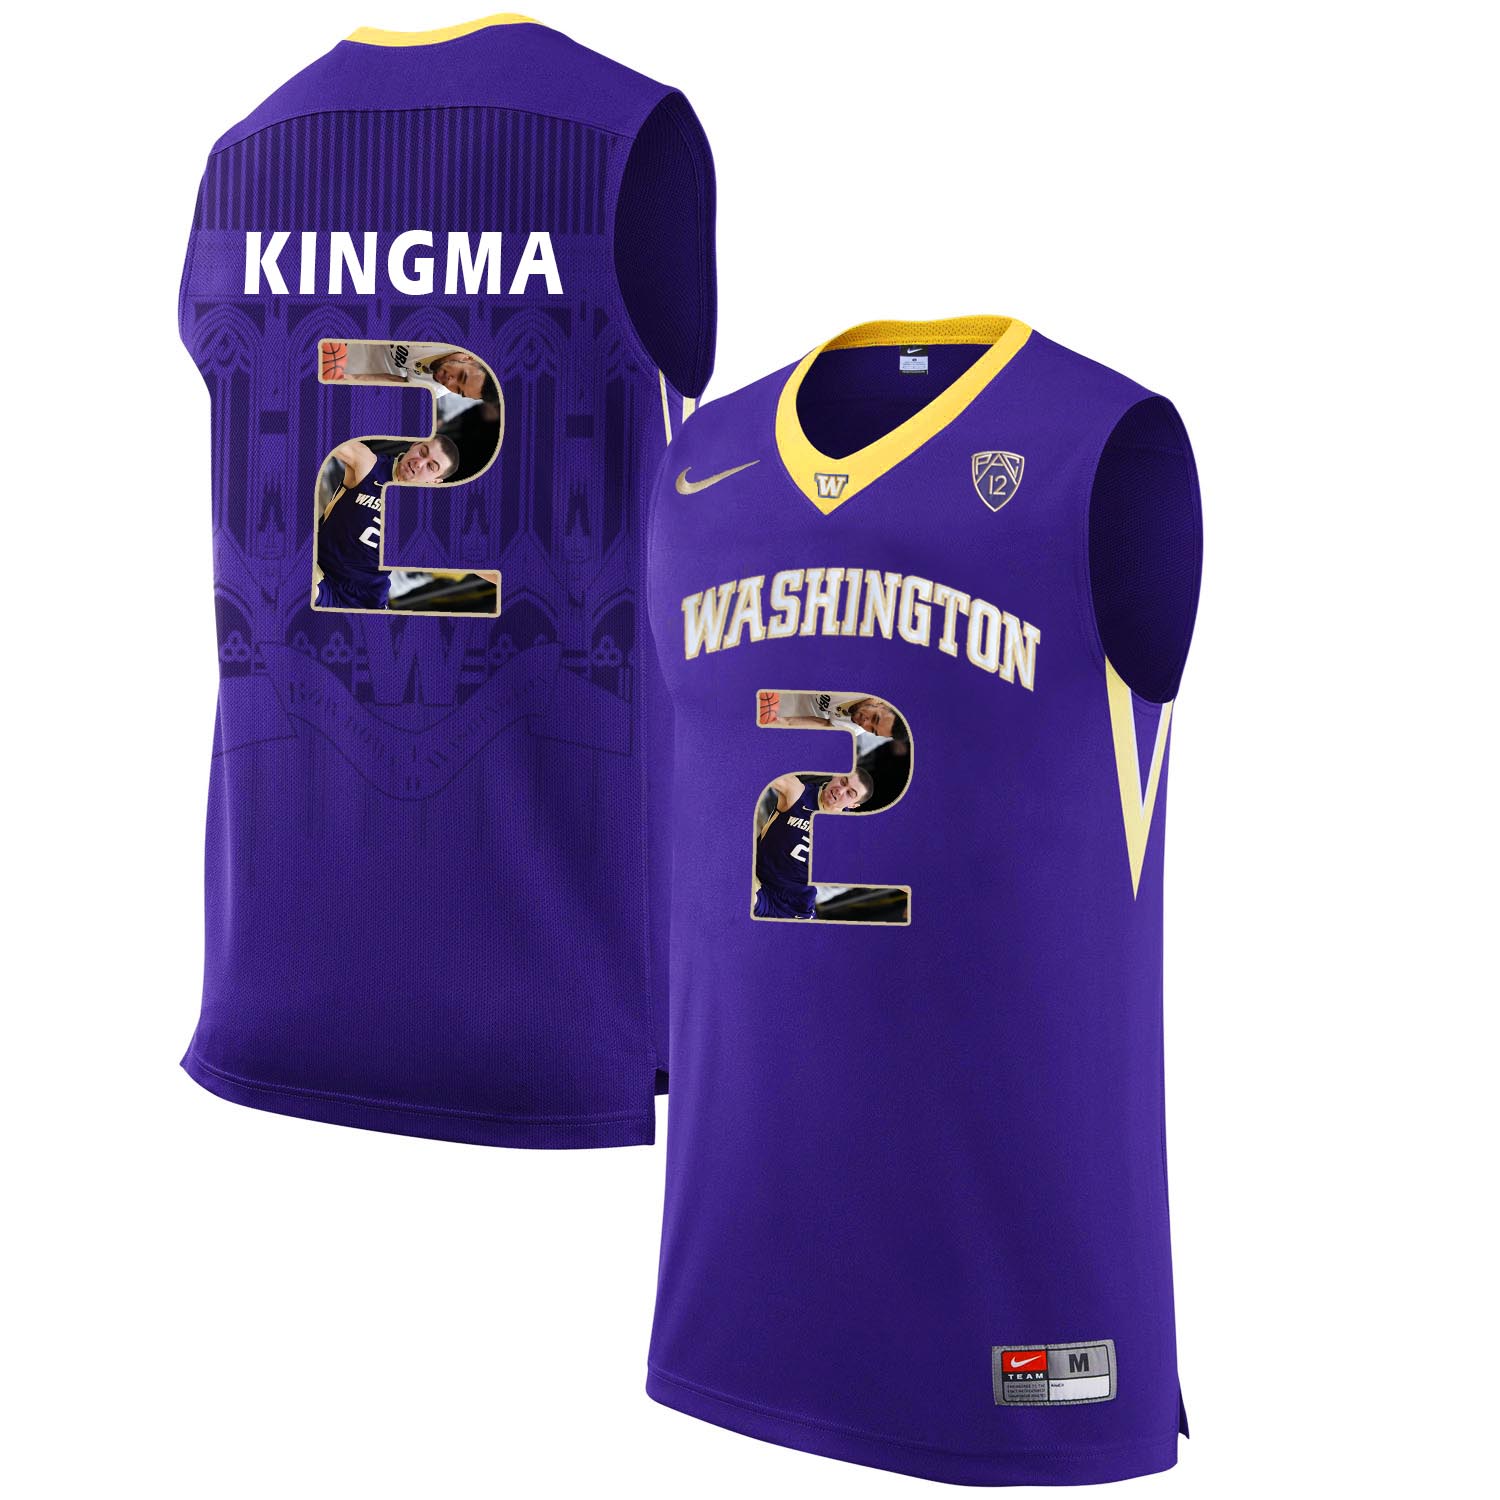 Washington Huskies 2 Dan Kingma Purple With Portait College Basketball Jersey